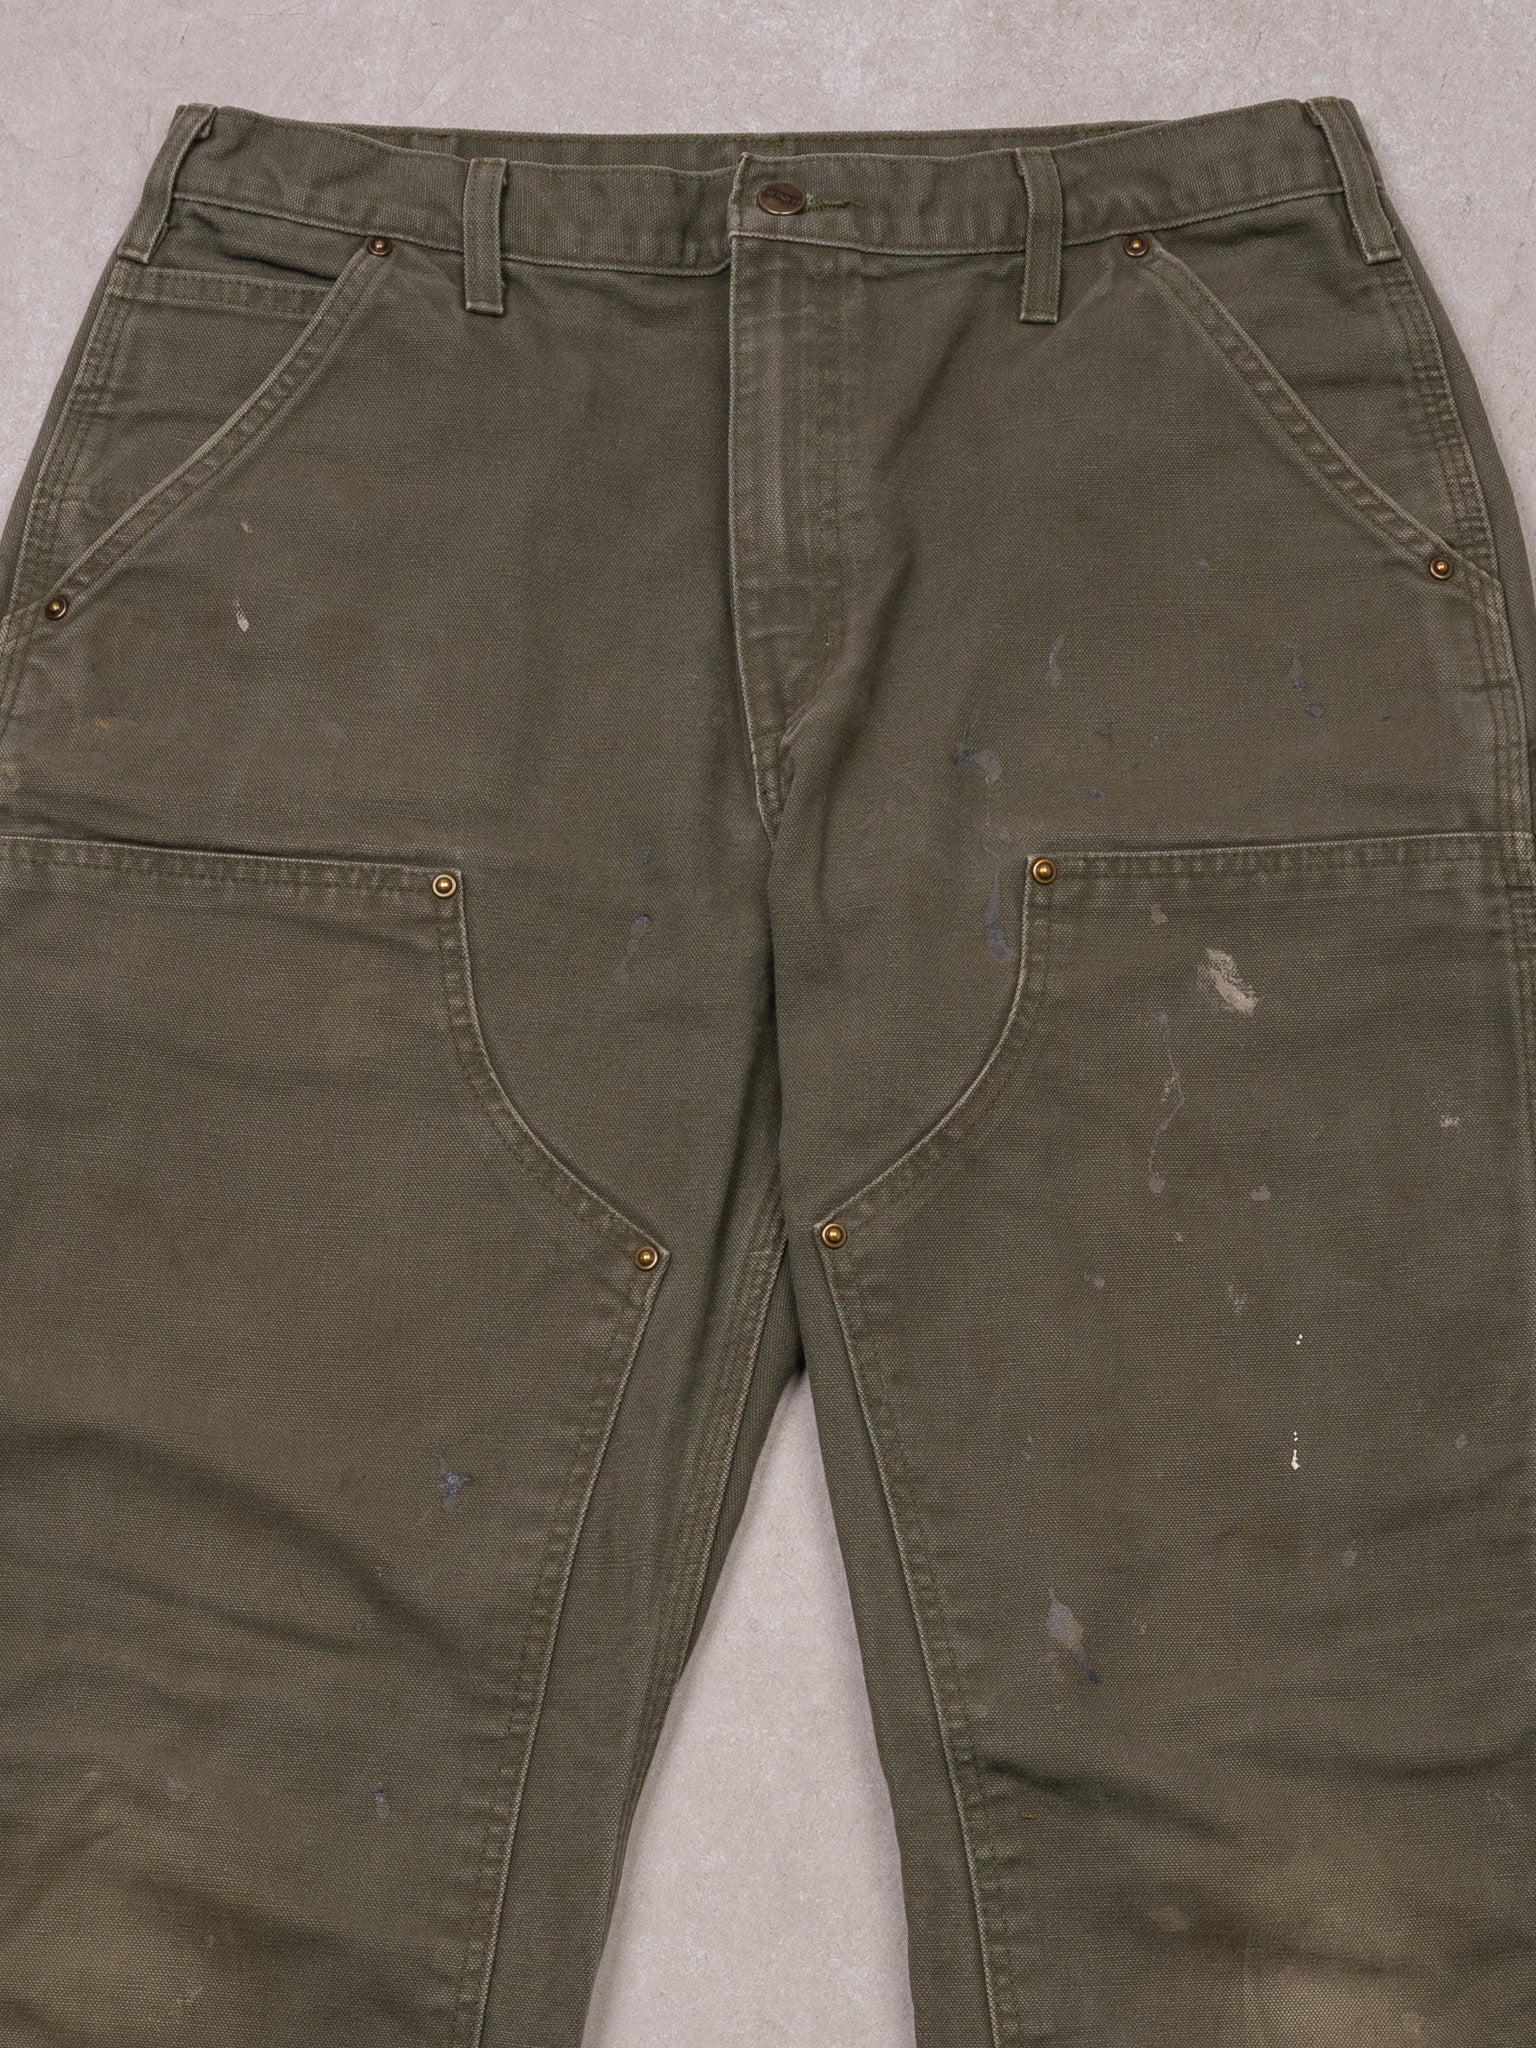 Vintage Moss Green Carhartt Double Knee Paint Splash Cargo Pants (33 x 32)